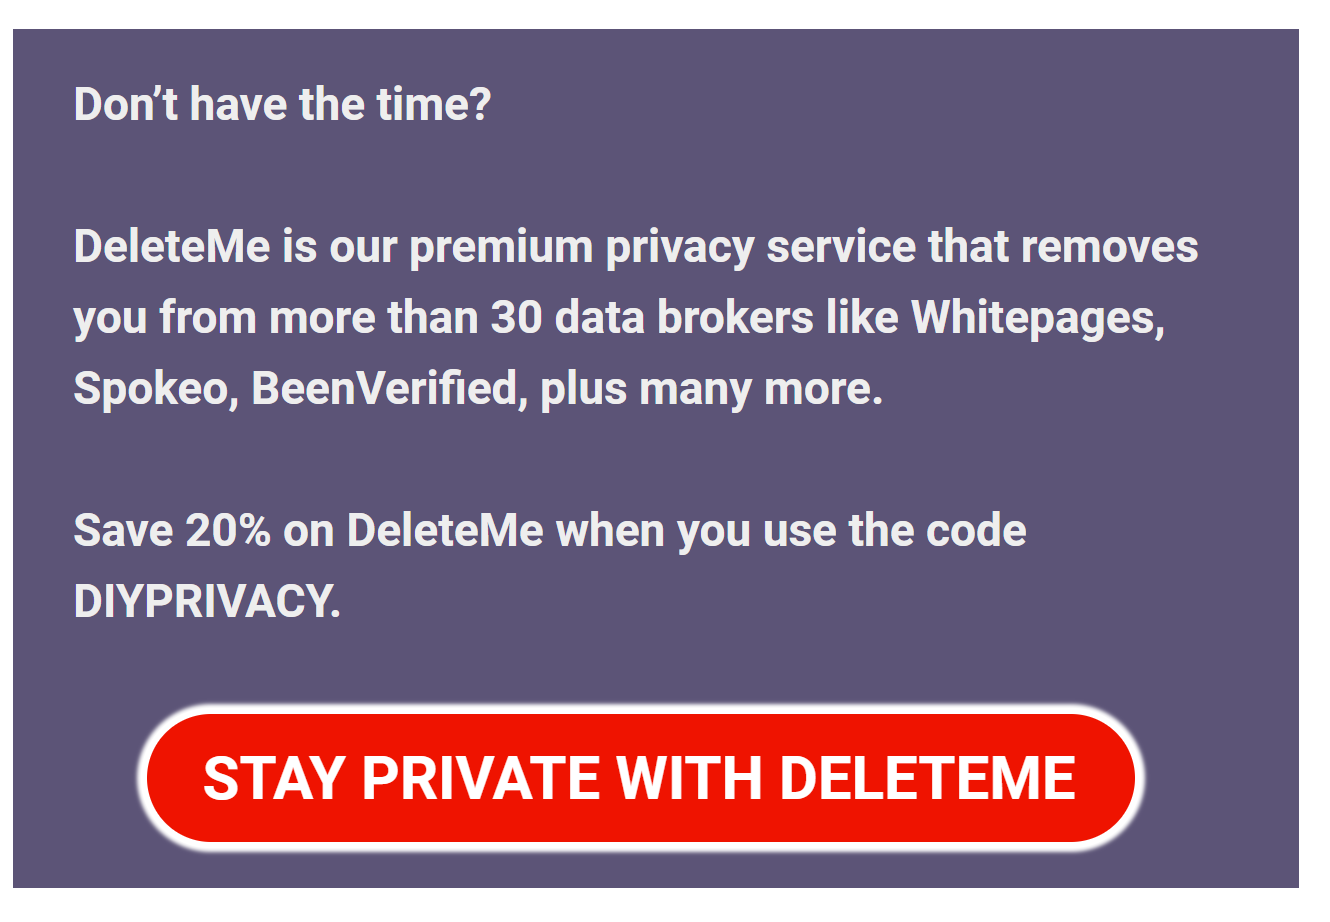 deleteme 评论 2021:保护您的在线隐私(合法吗?